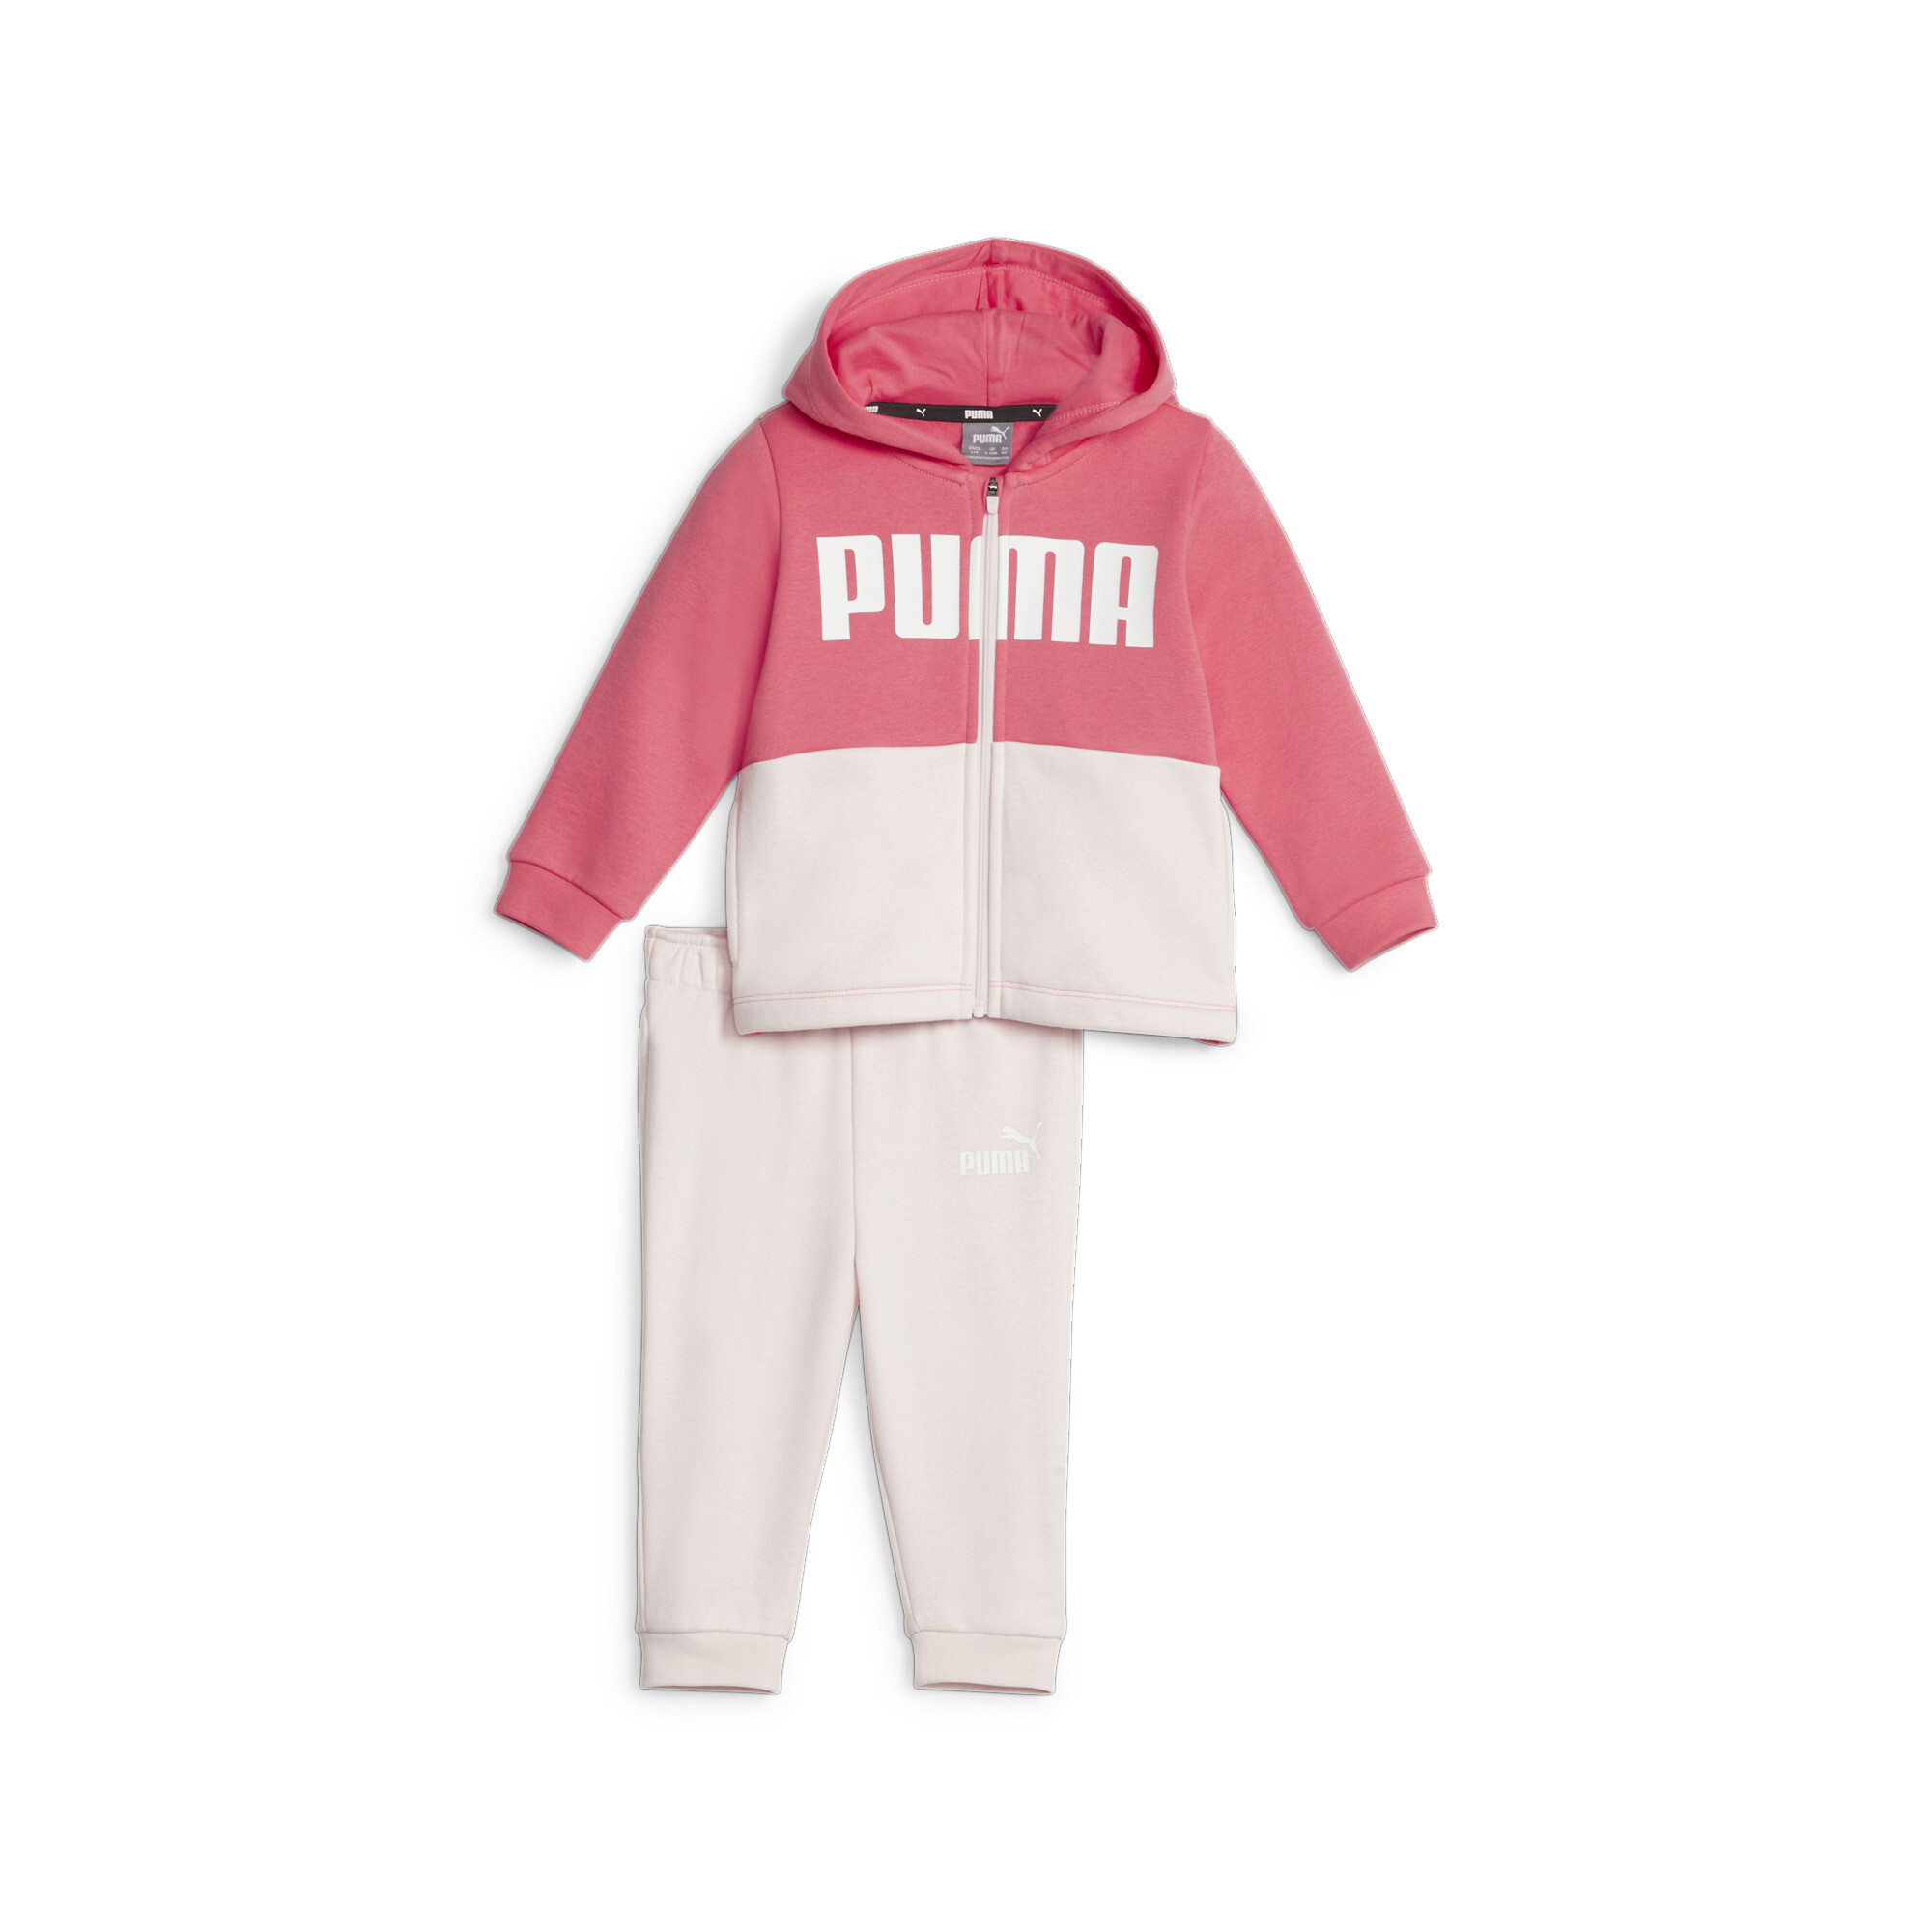 PUMA Minicats Colourblock Jogger Suit Babies In Pink, Size 9-12 Months